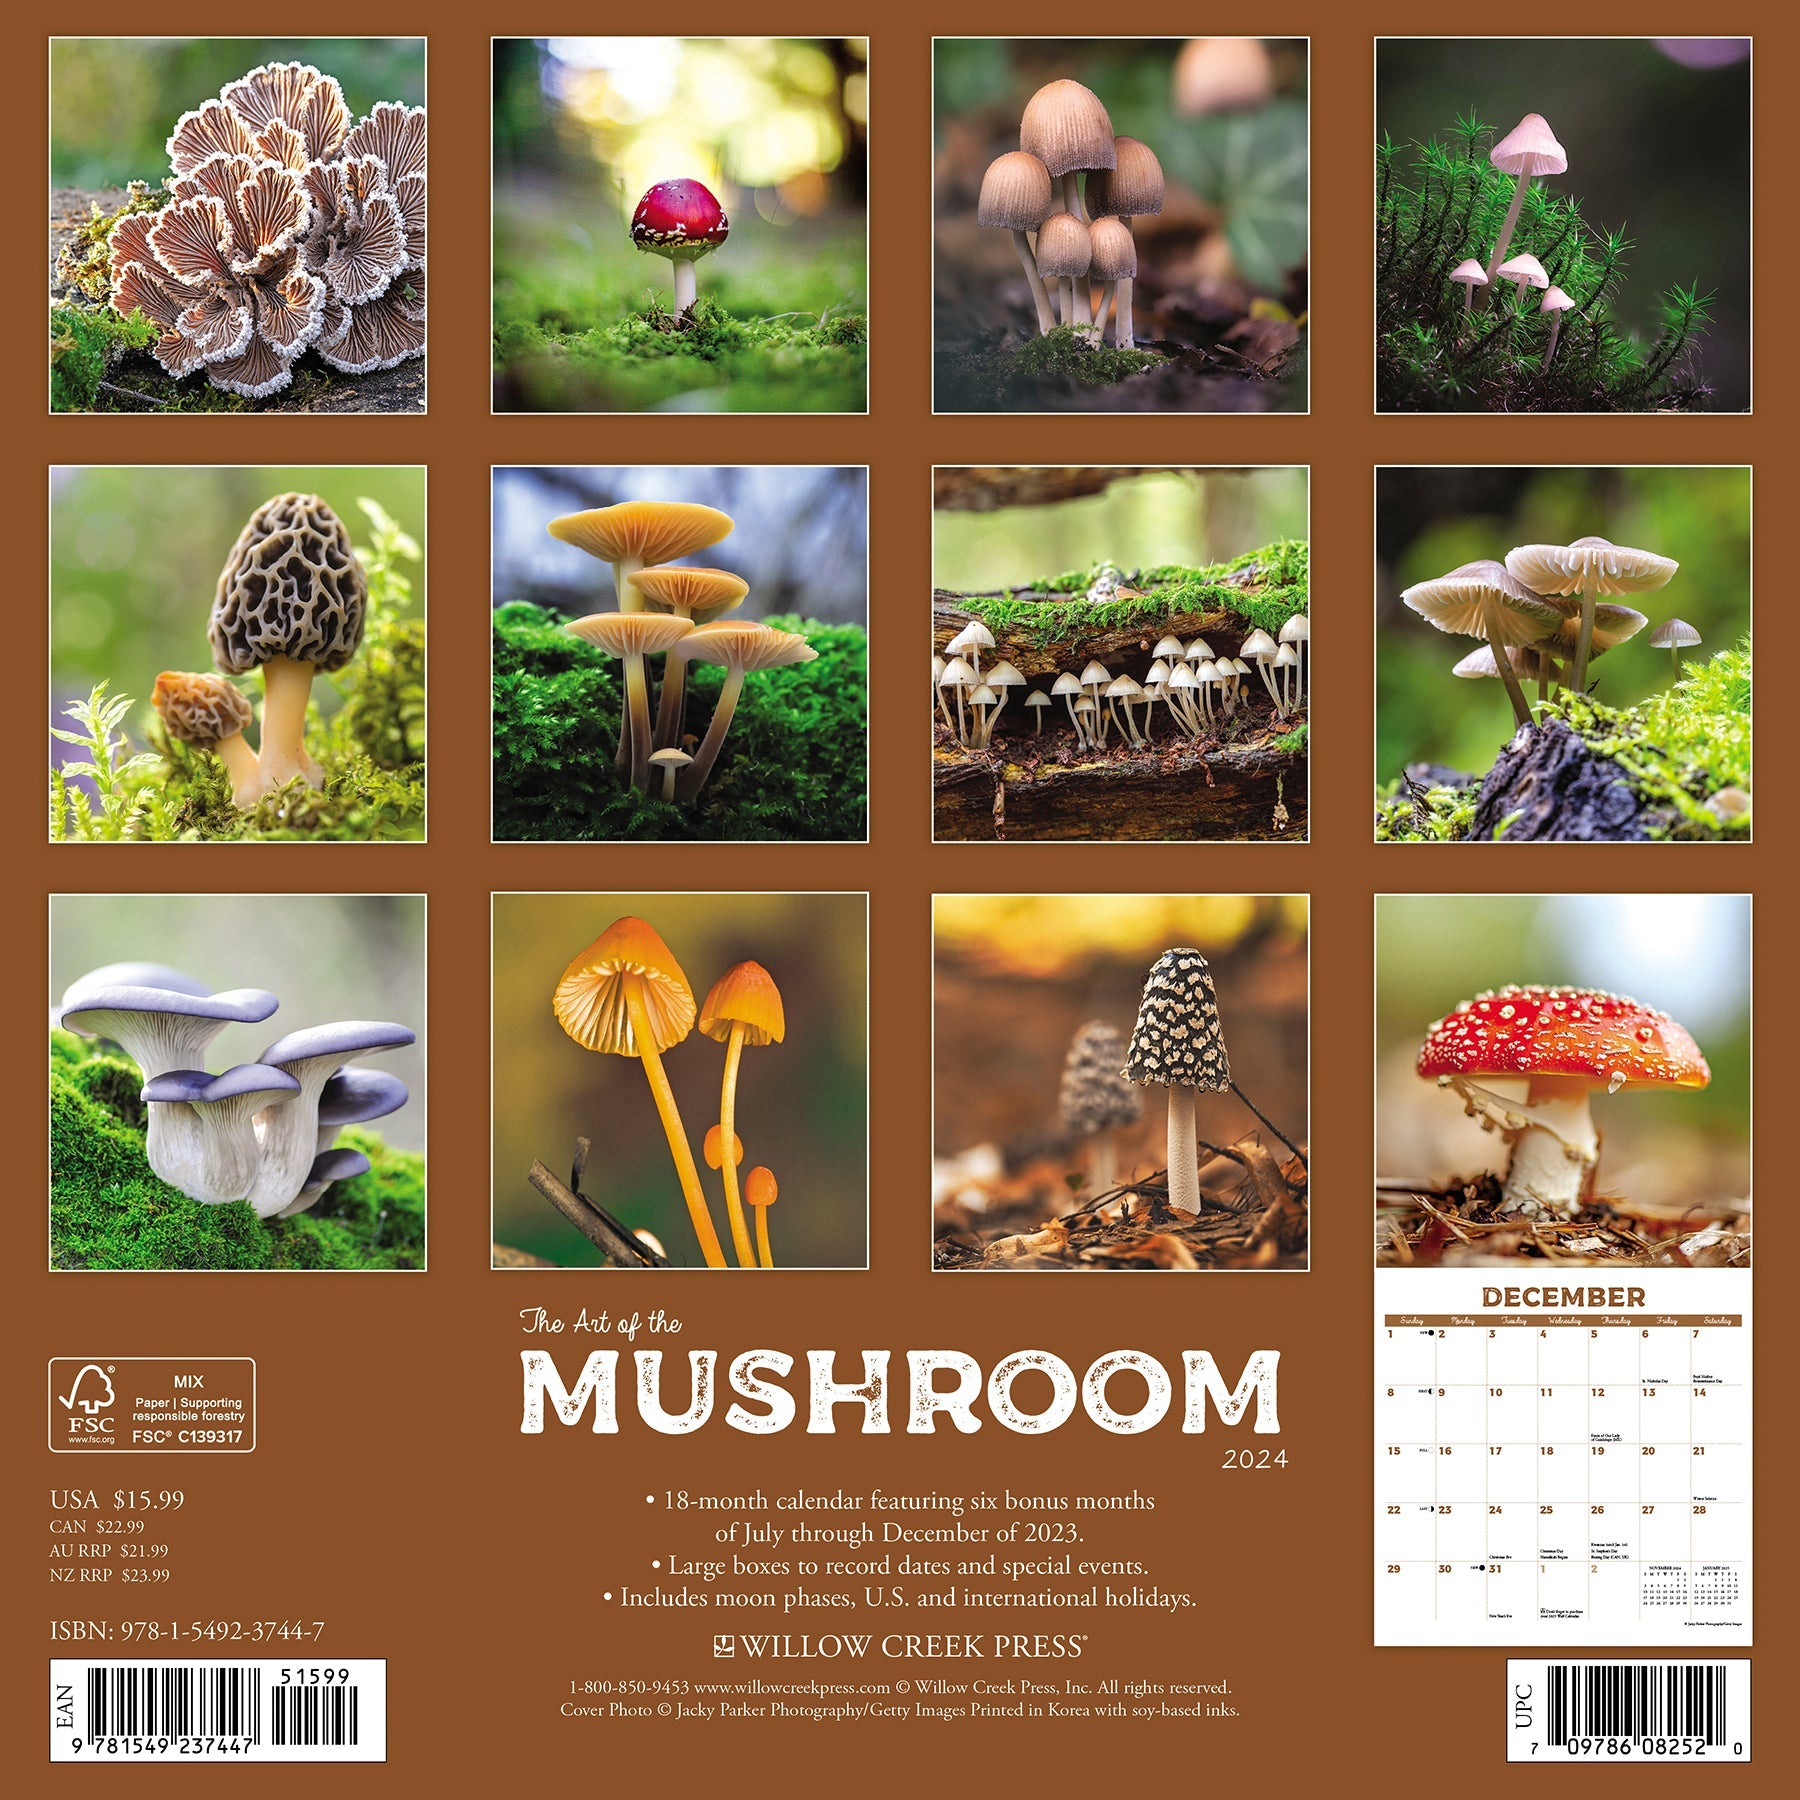 2024 Mushroom (The Art of the) - Wall Calendar